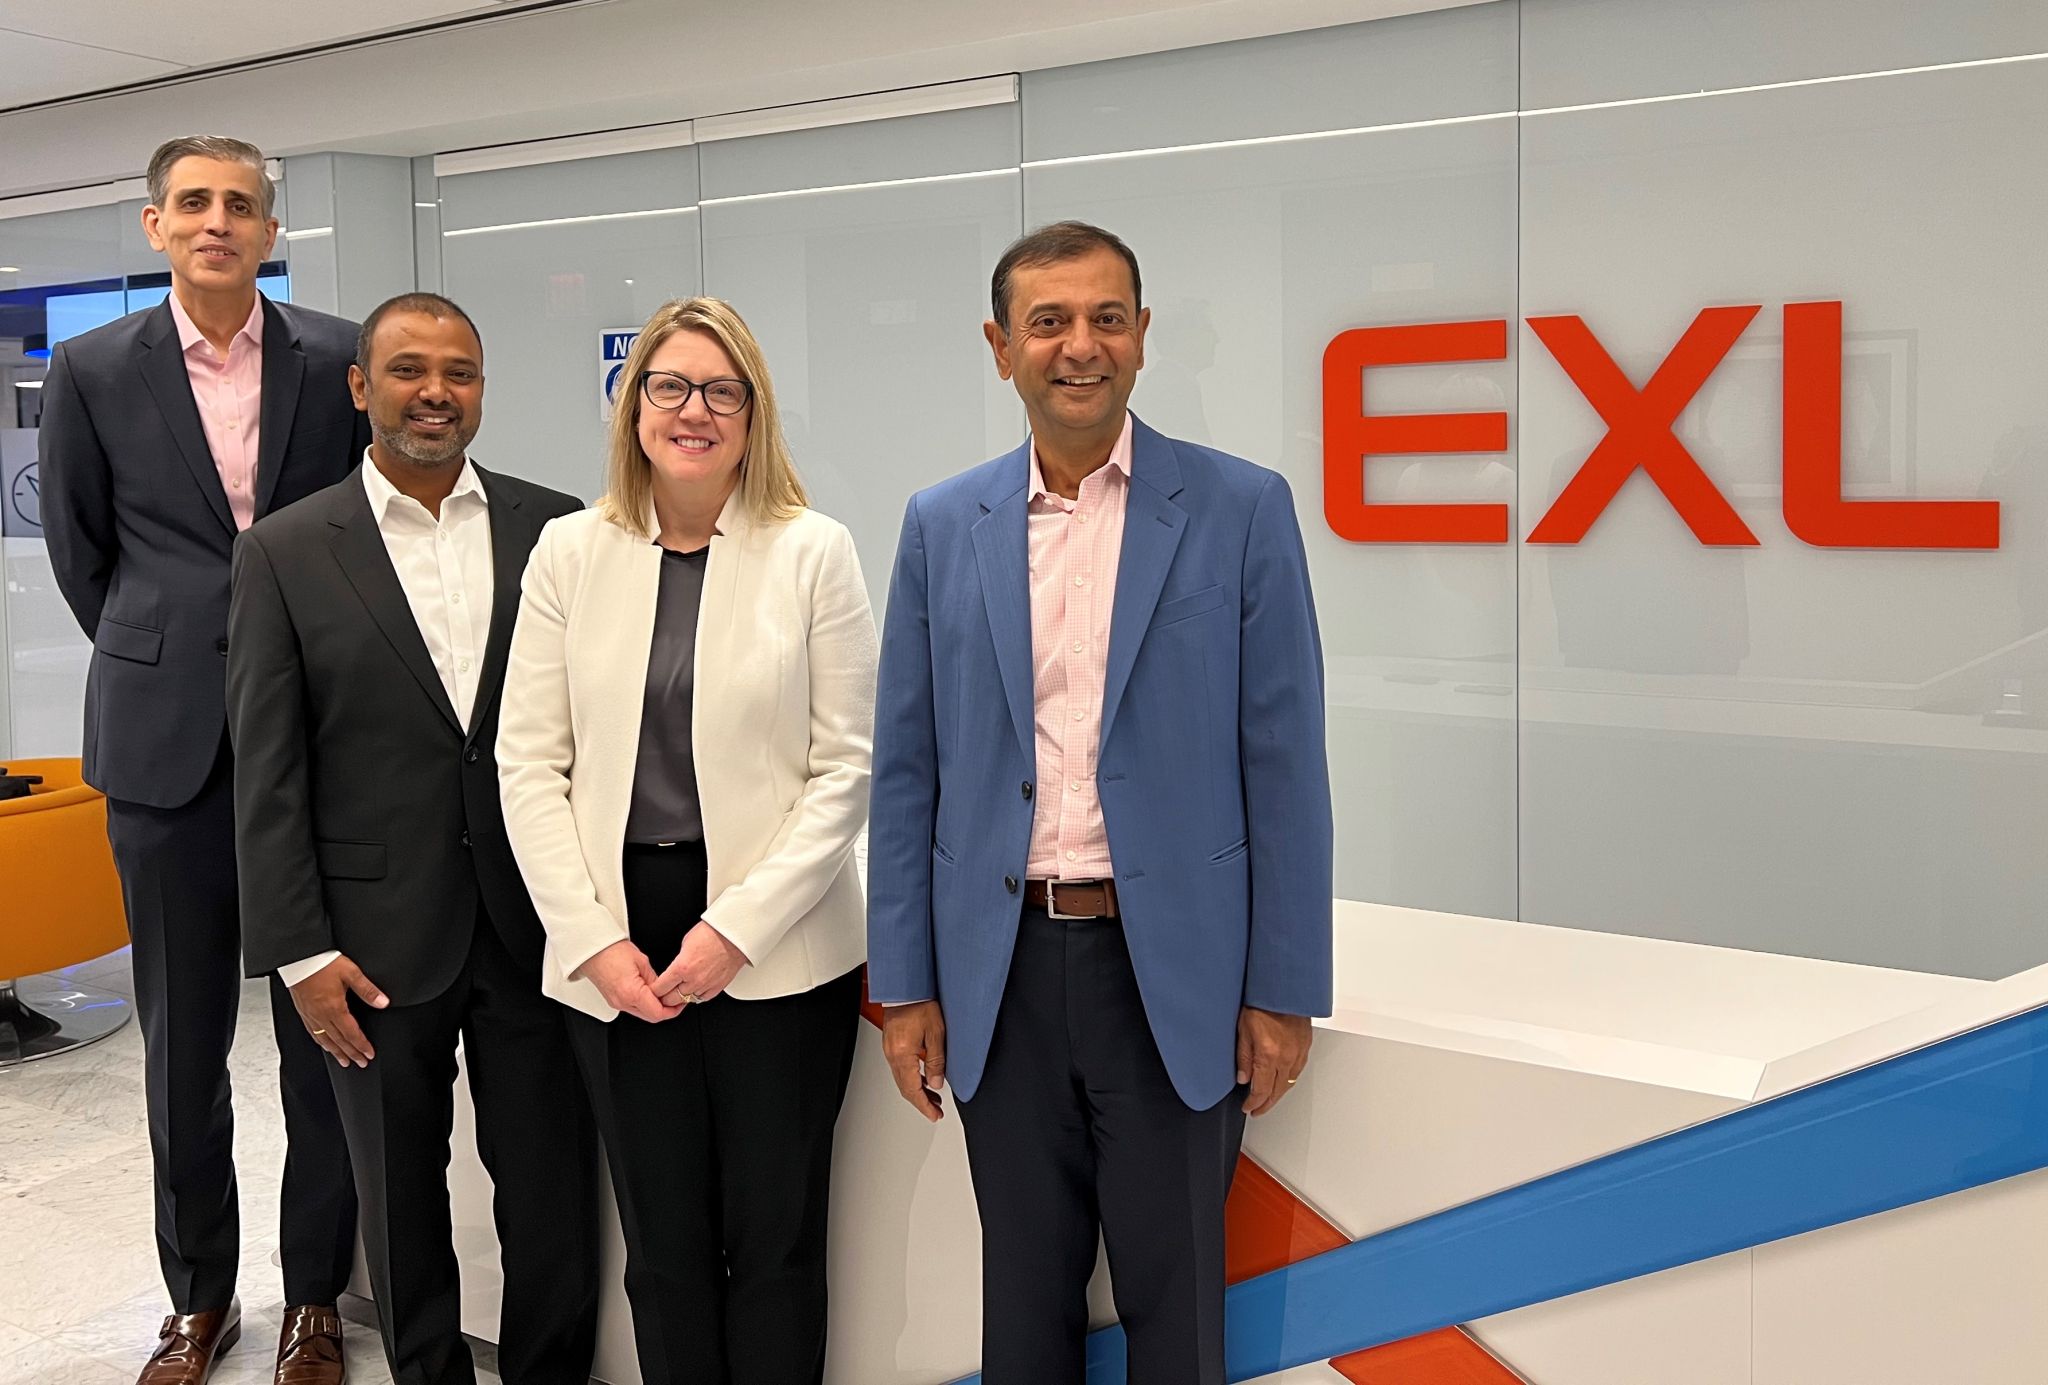 Leading data analytics company EXL announces revenue growth of 25.9